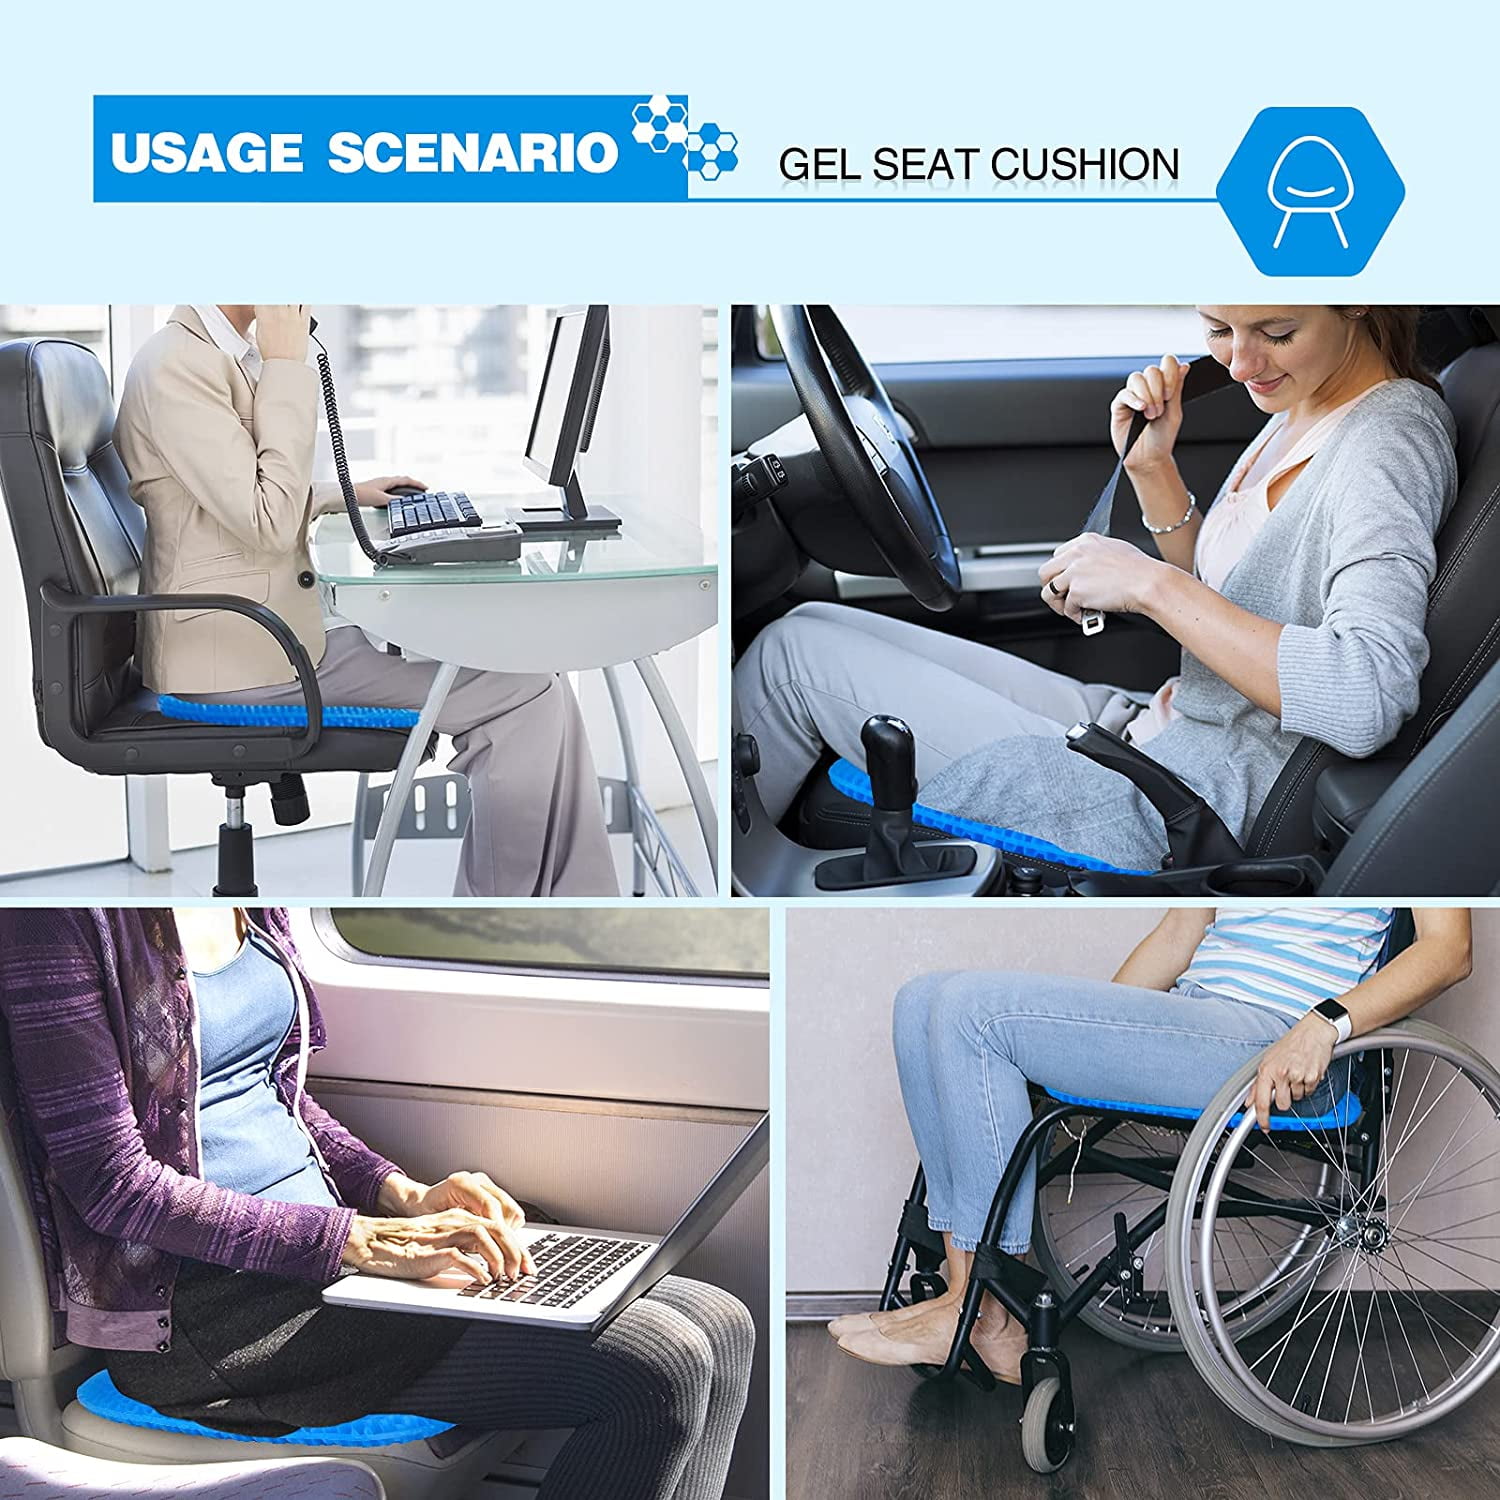 Fencesmart Gel Seat Cushion, Breathable Honeycomb Design Pressure Relief  Sitting Cushion for Home Office Desk Chair Car Wheelchair 